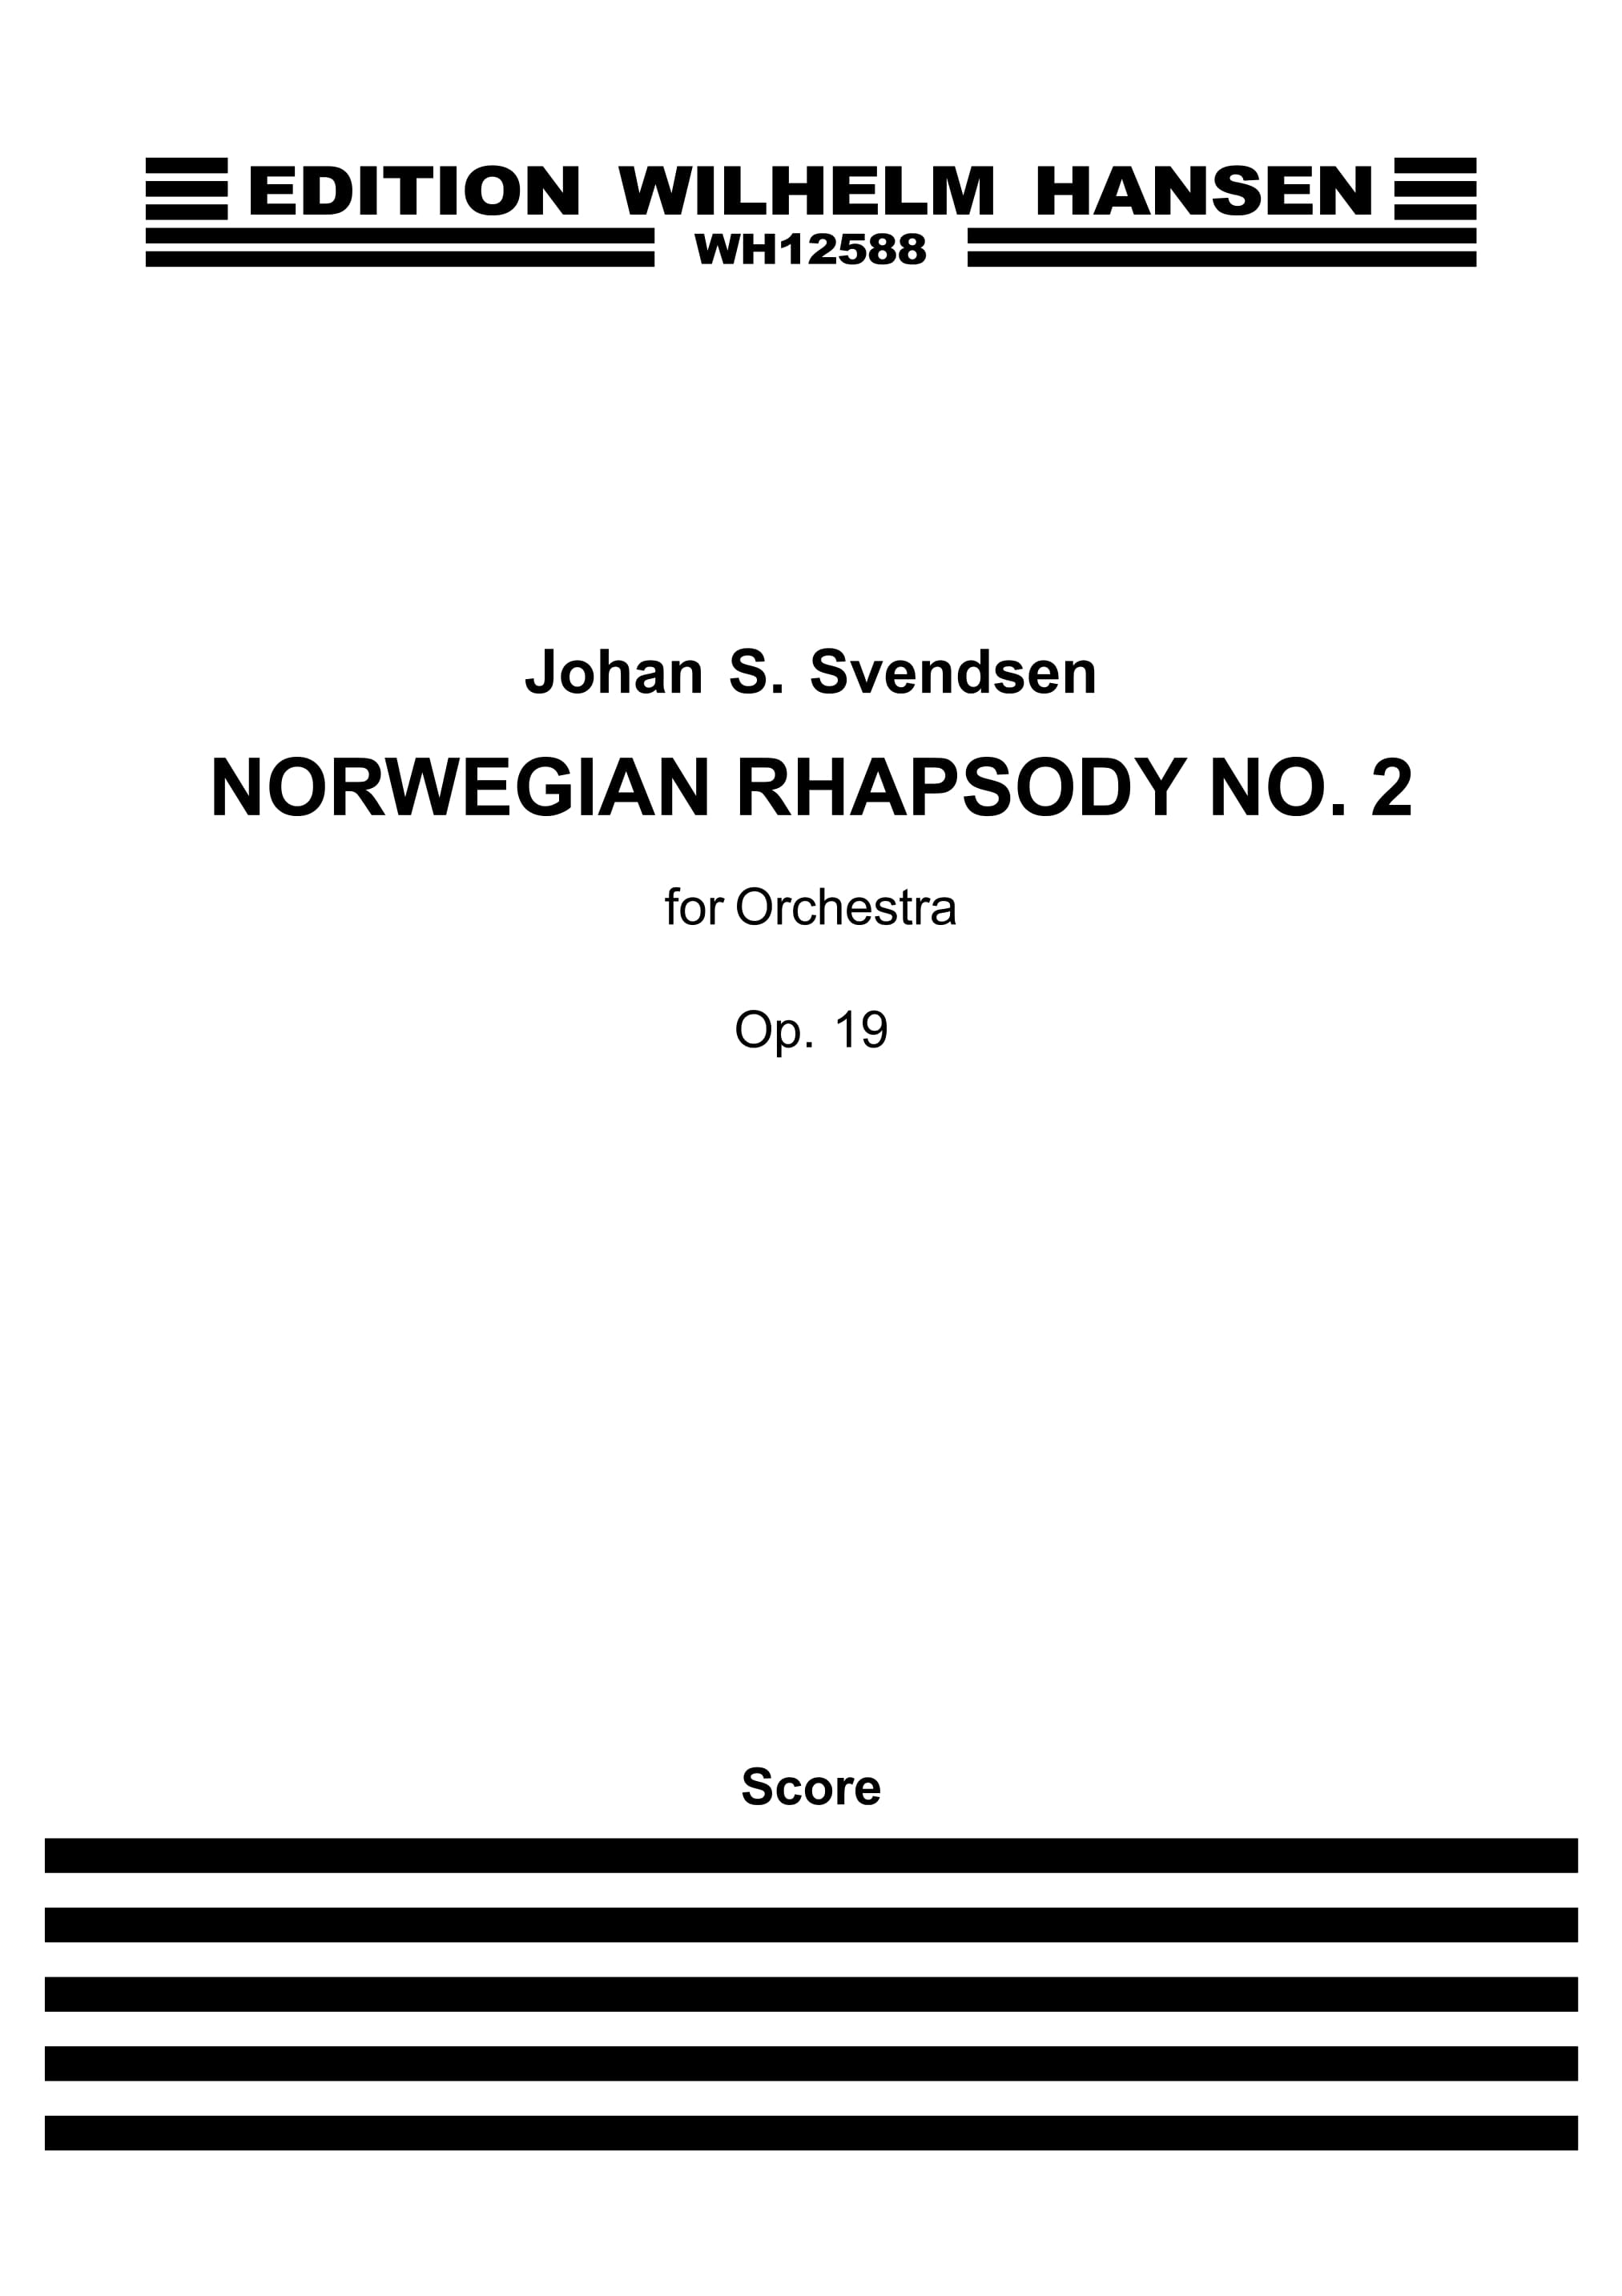 Johan Svendsen: Rapsodie Norvegiénne No. 2 Op. 19: Orchestra: Score